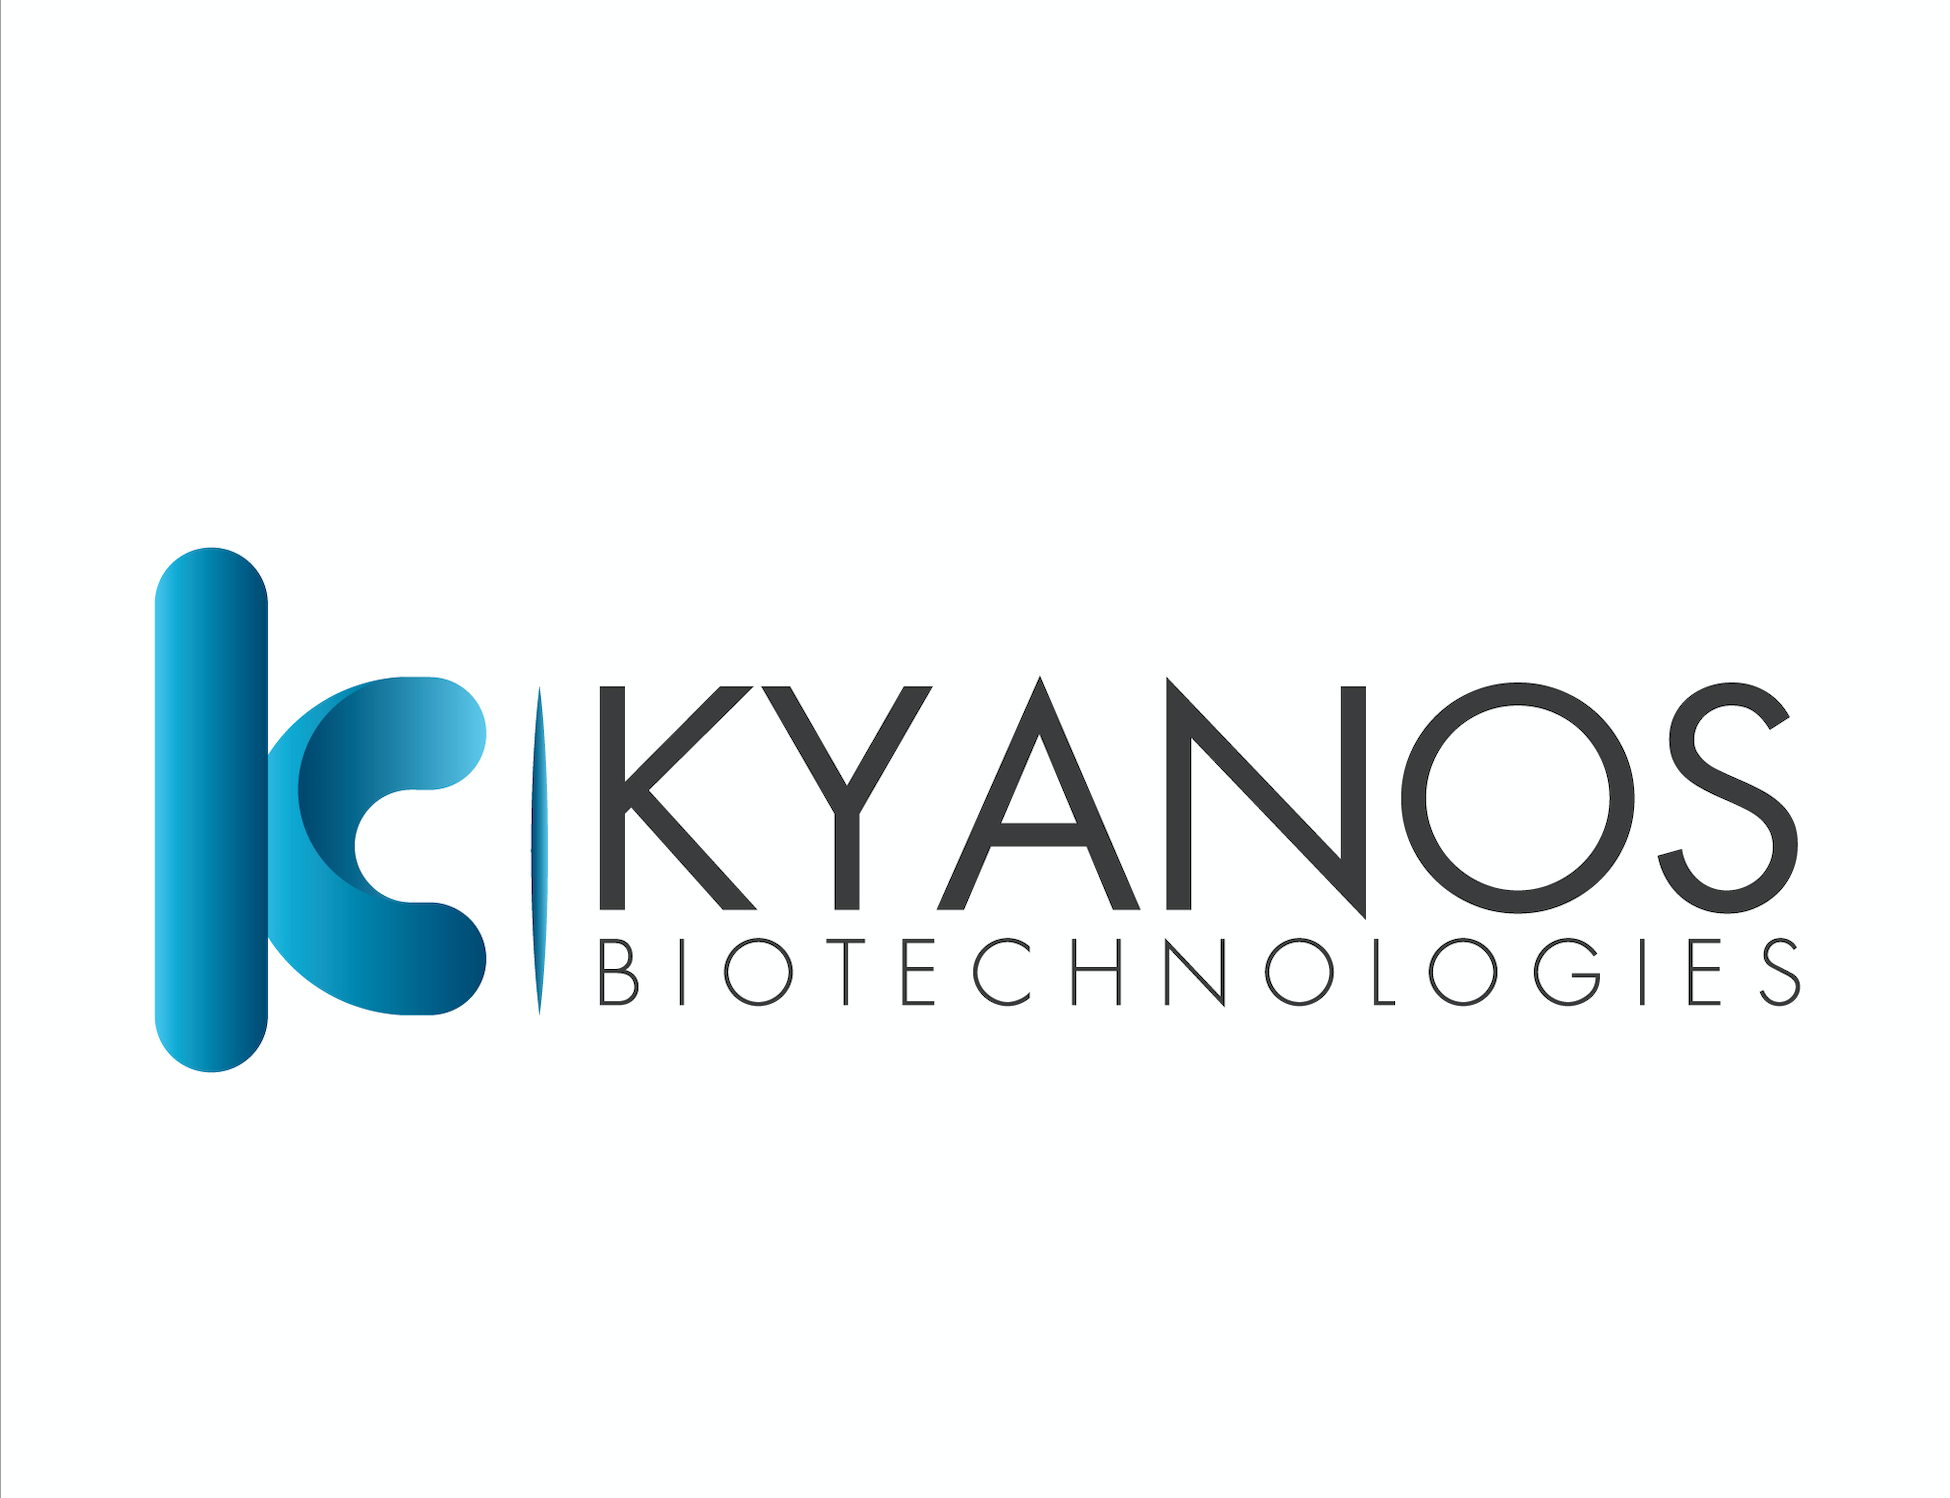 Kyanos Biotechnologies